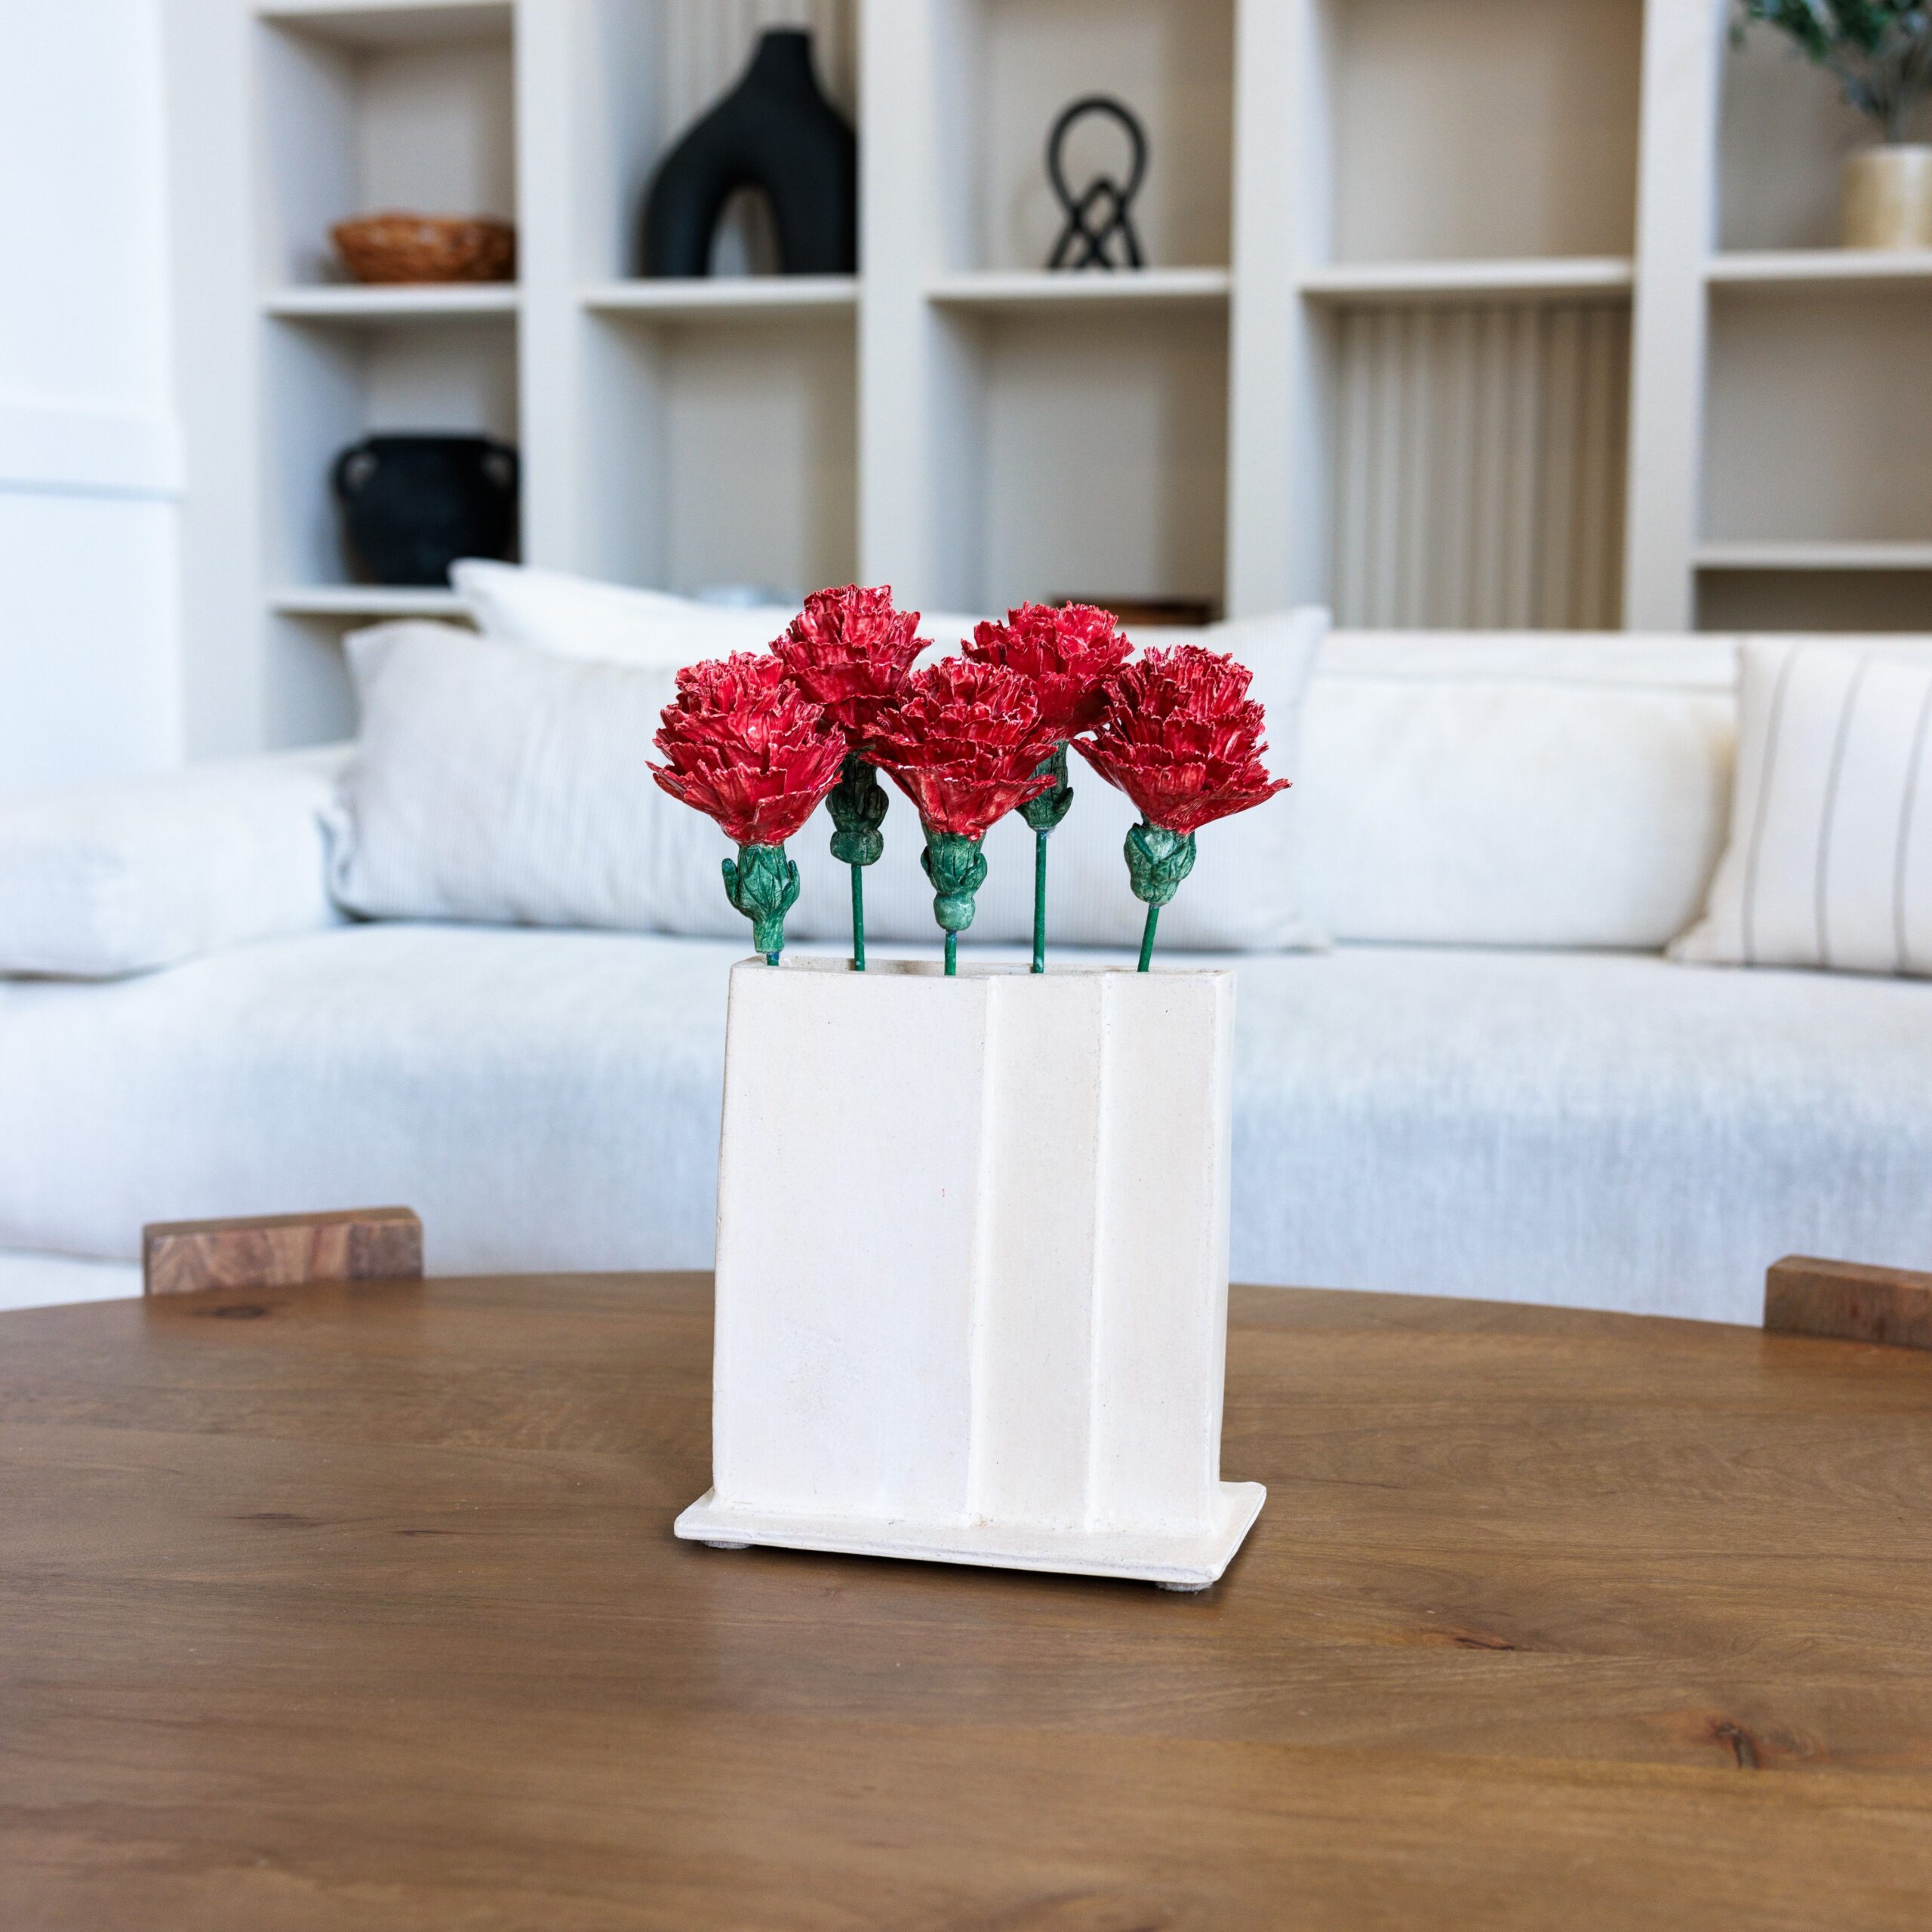 Gerri Orwin: Carnation Sculpture Product Image 2 of 2